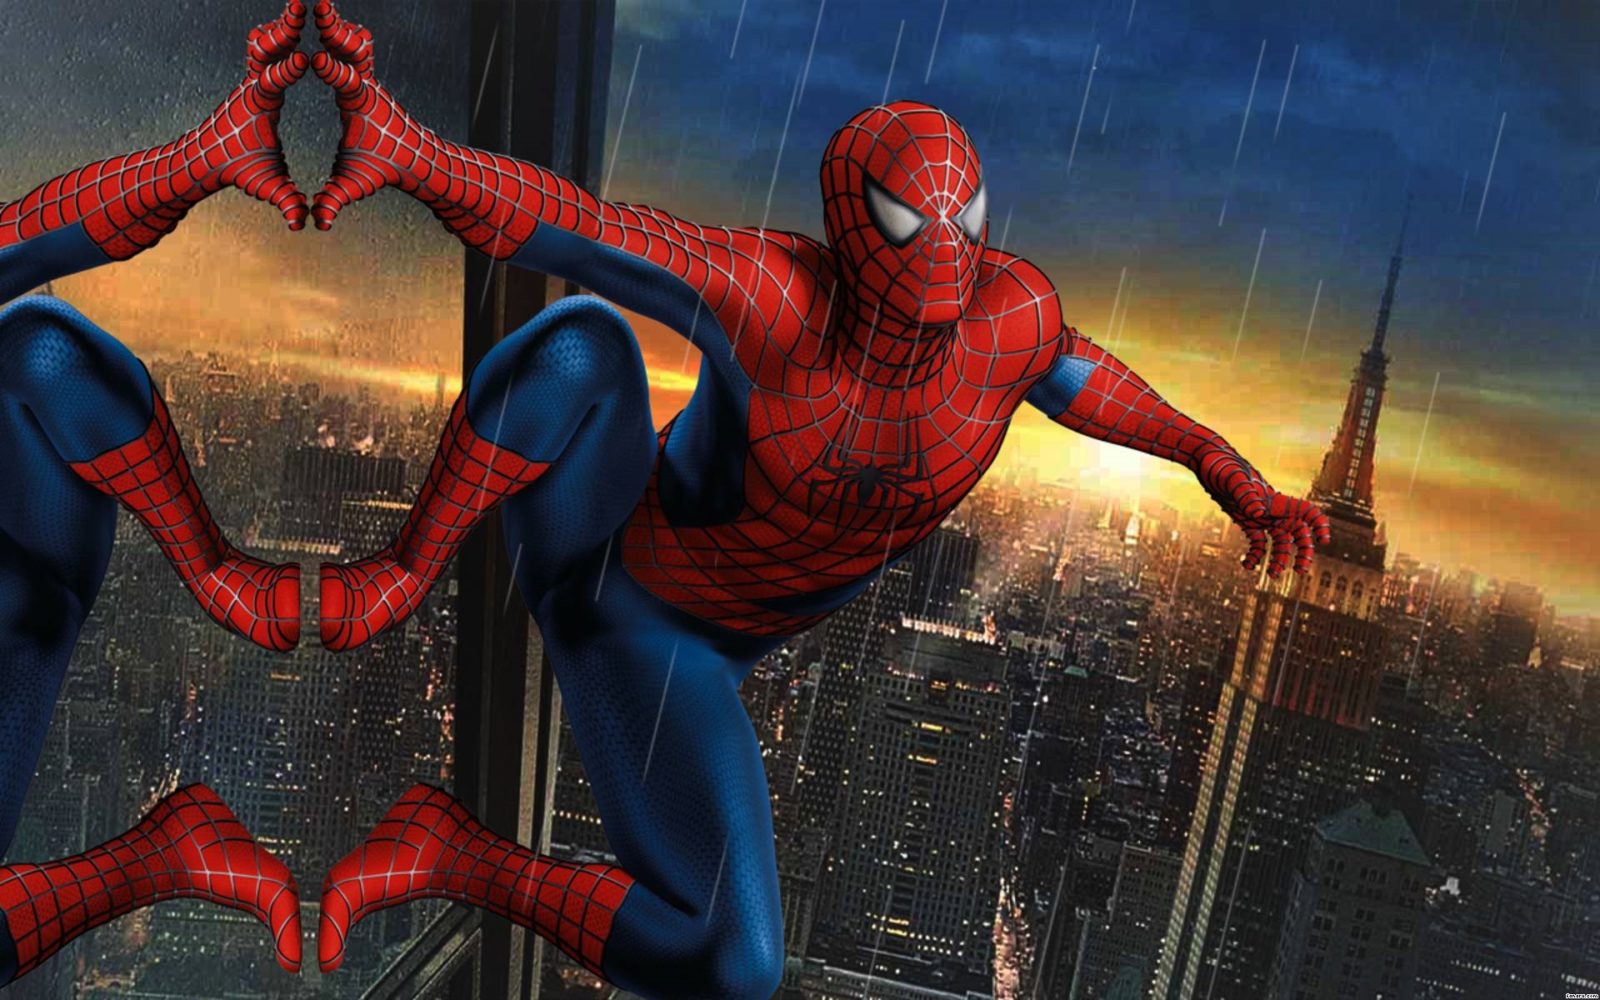 Spider-Man climbing a skyscraper